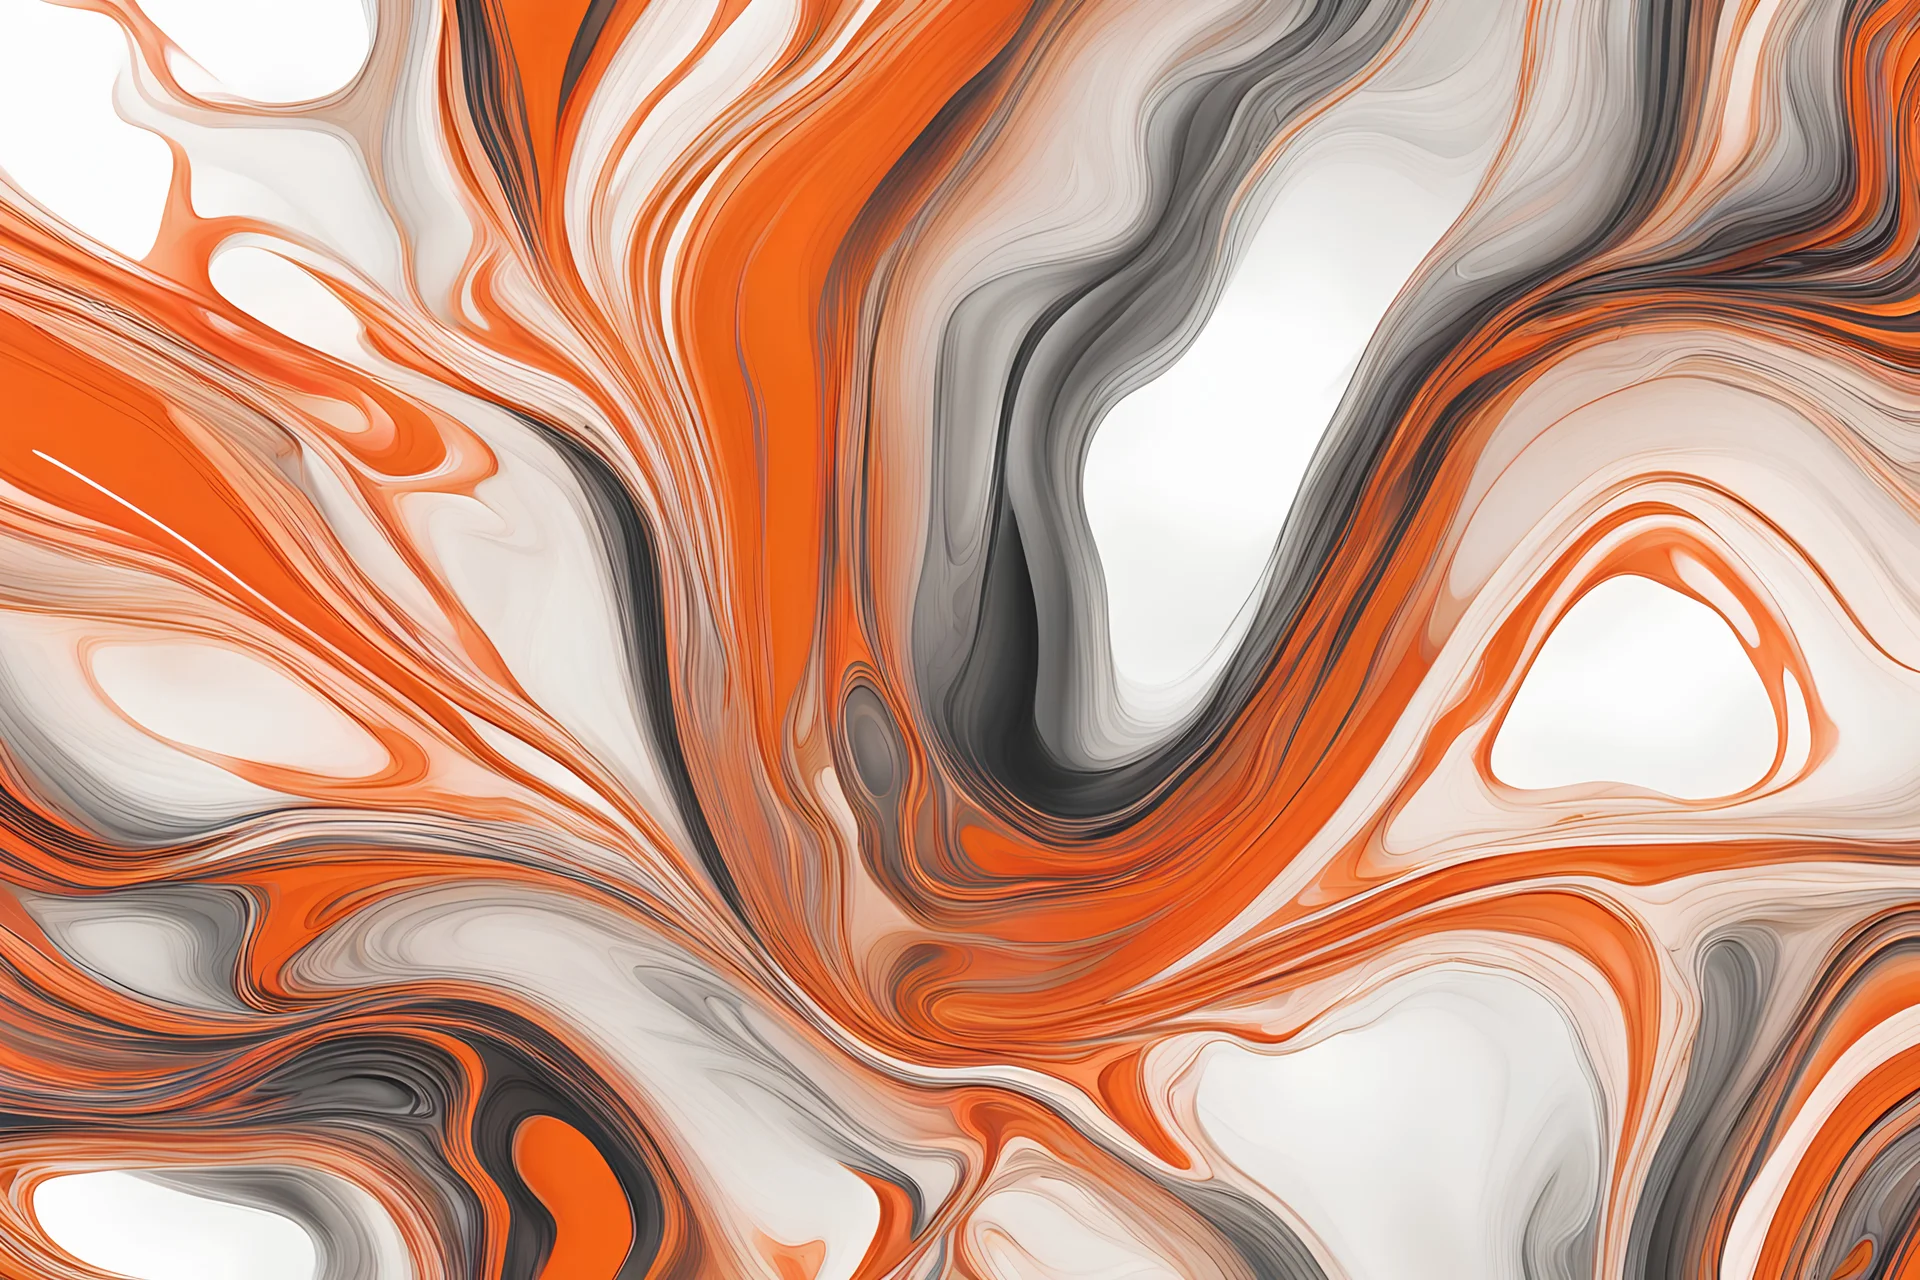 Professional Digital Painting, Abstract Art, orange,liquid